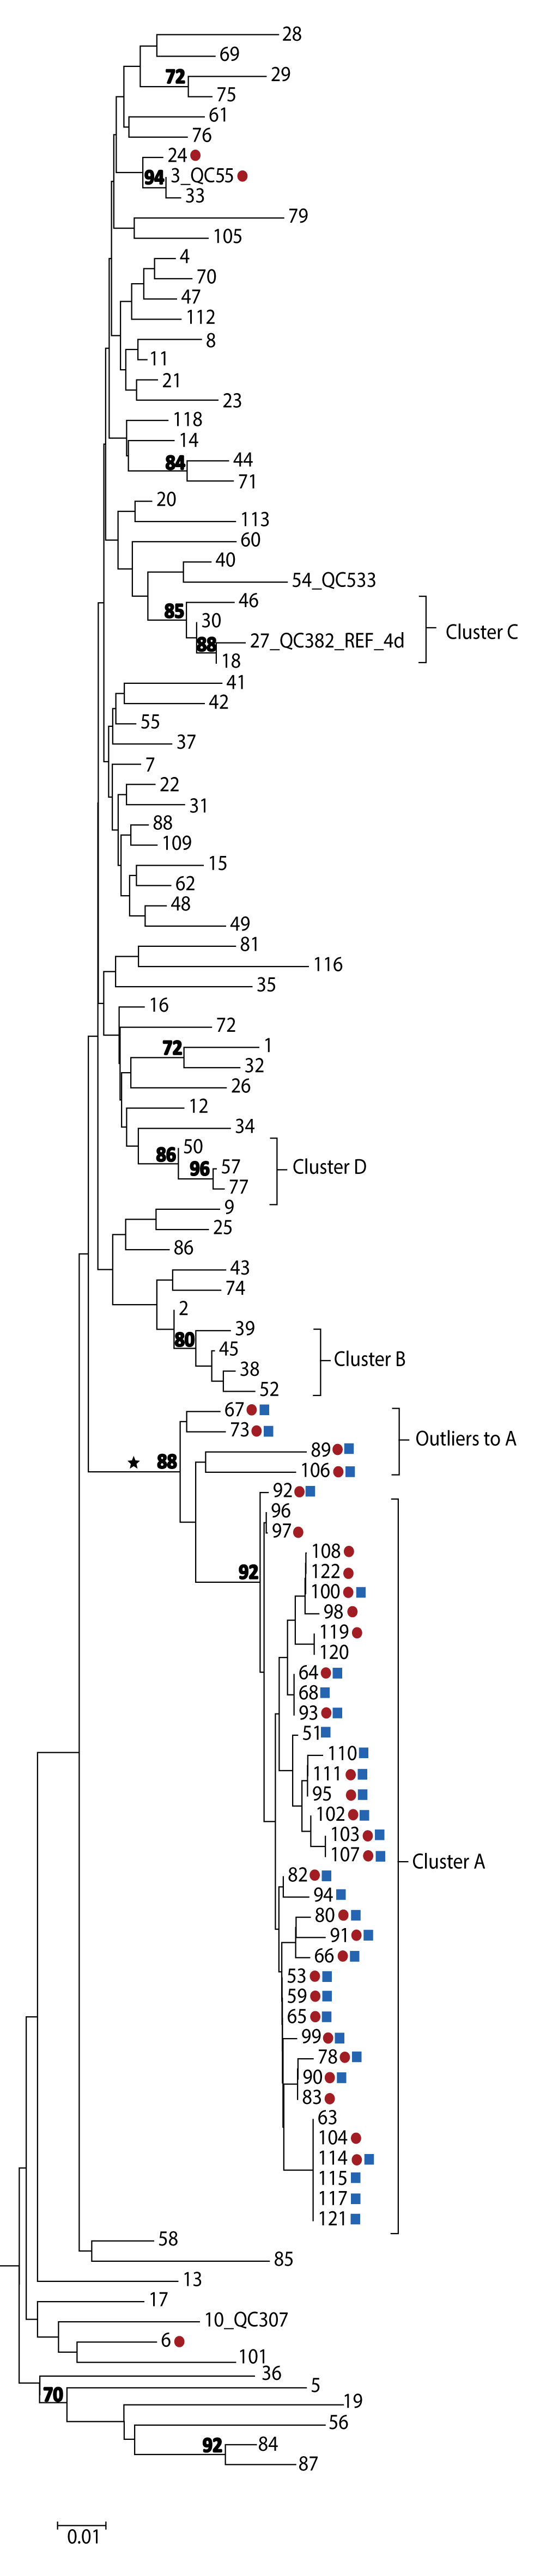 Figure 2: Phylogenetic tree of genotype 4d NS5B hepatitis C virus isolate sequences, Quebec, Canada, November 2001 to December 2017 (n=122)